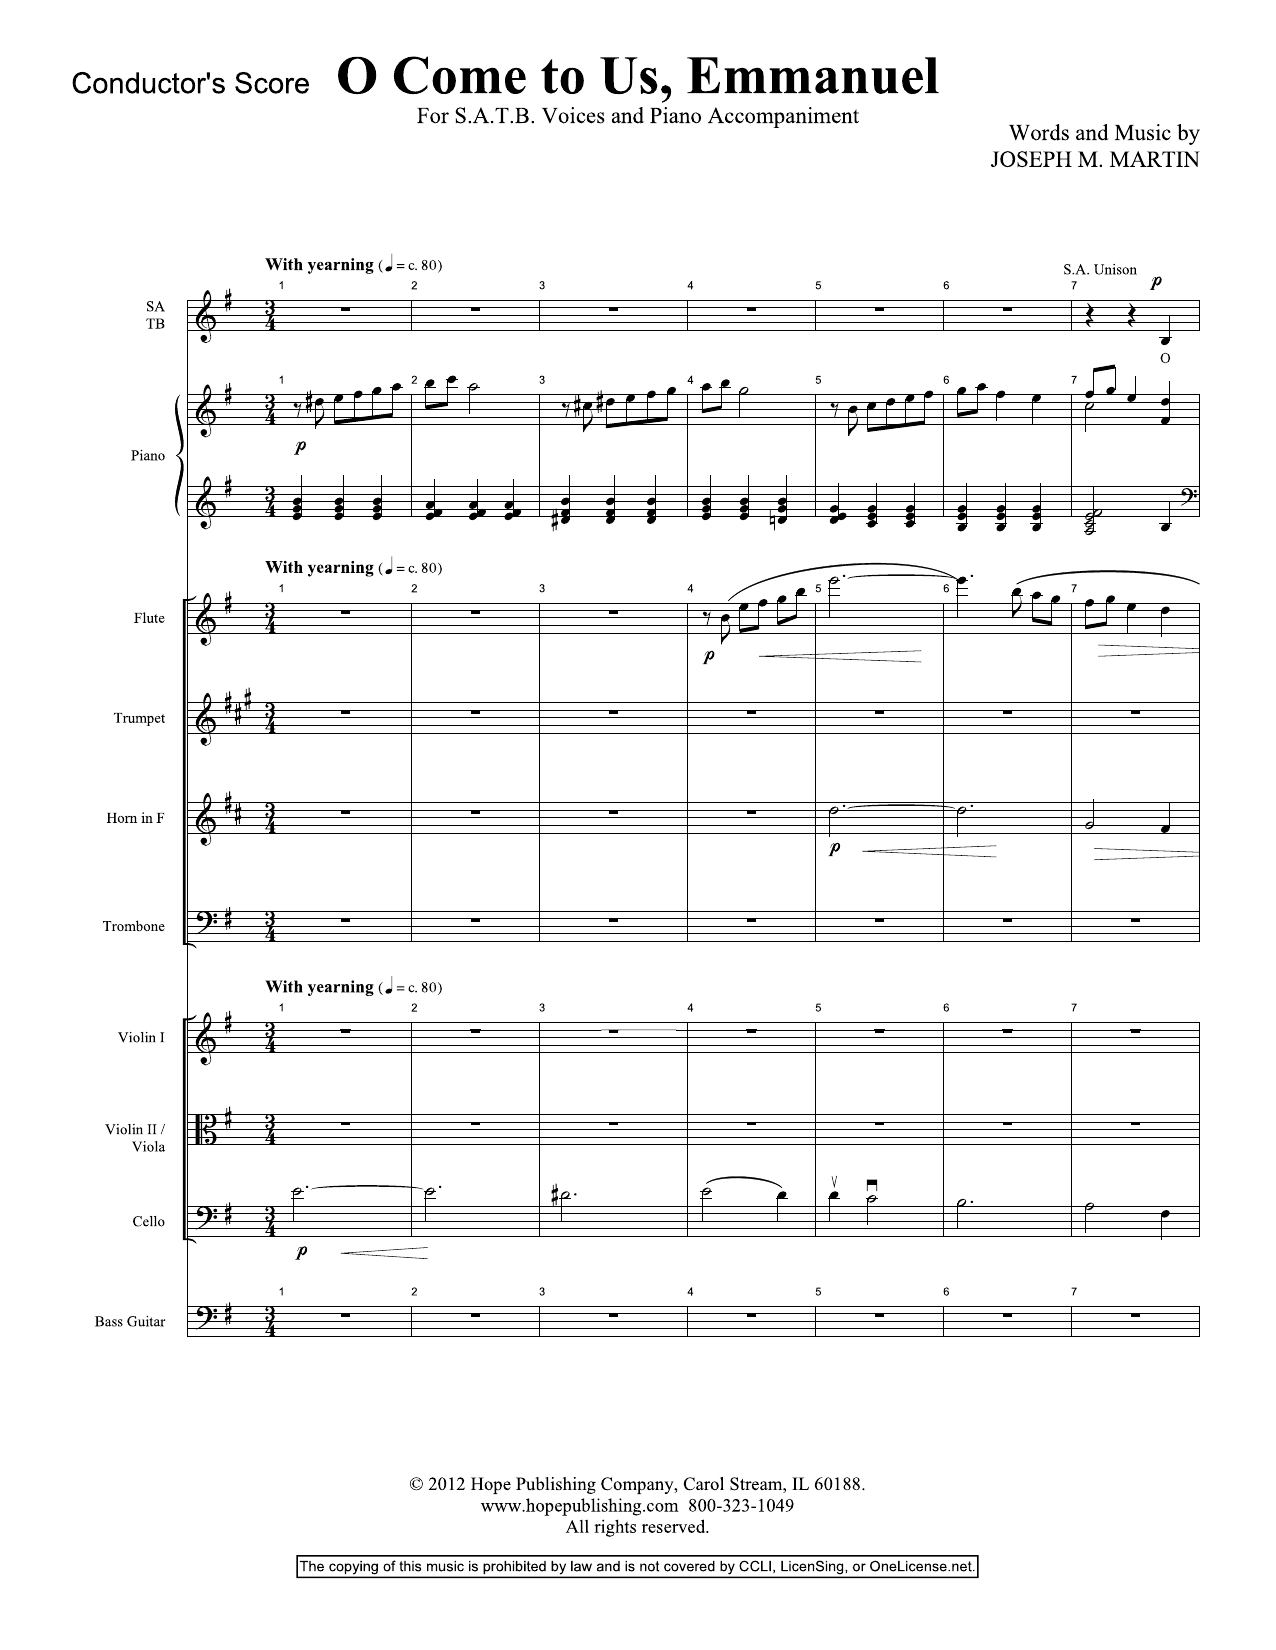 Joseph M. Martin O Come To Us, Emmanuel - Full Score Sheet Music Notes & Chords for Choir Instrumental Pak - Download or Print PDF